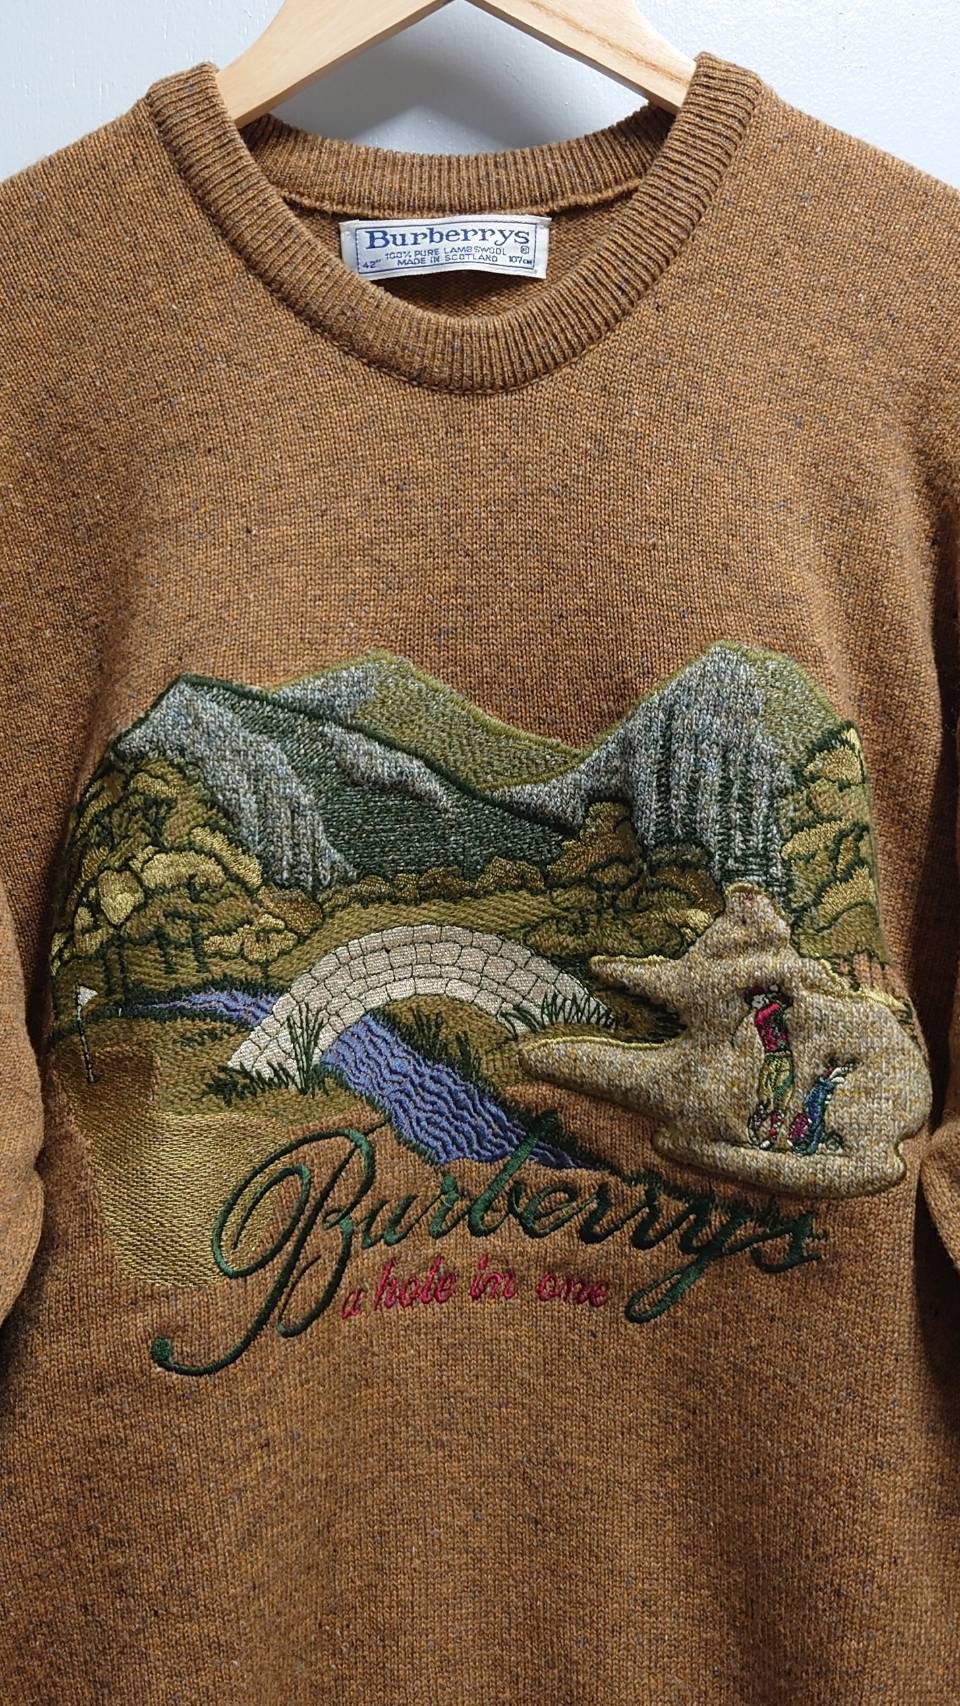 80-90's Burberrys スコットランド製 ウール ニット セーター